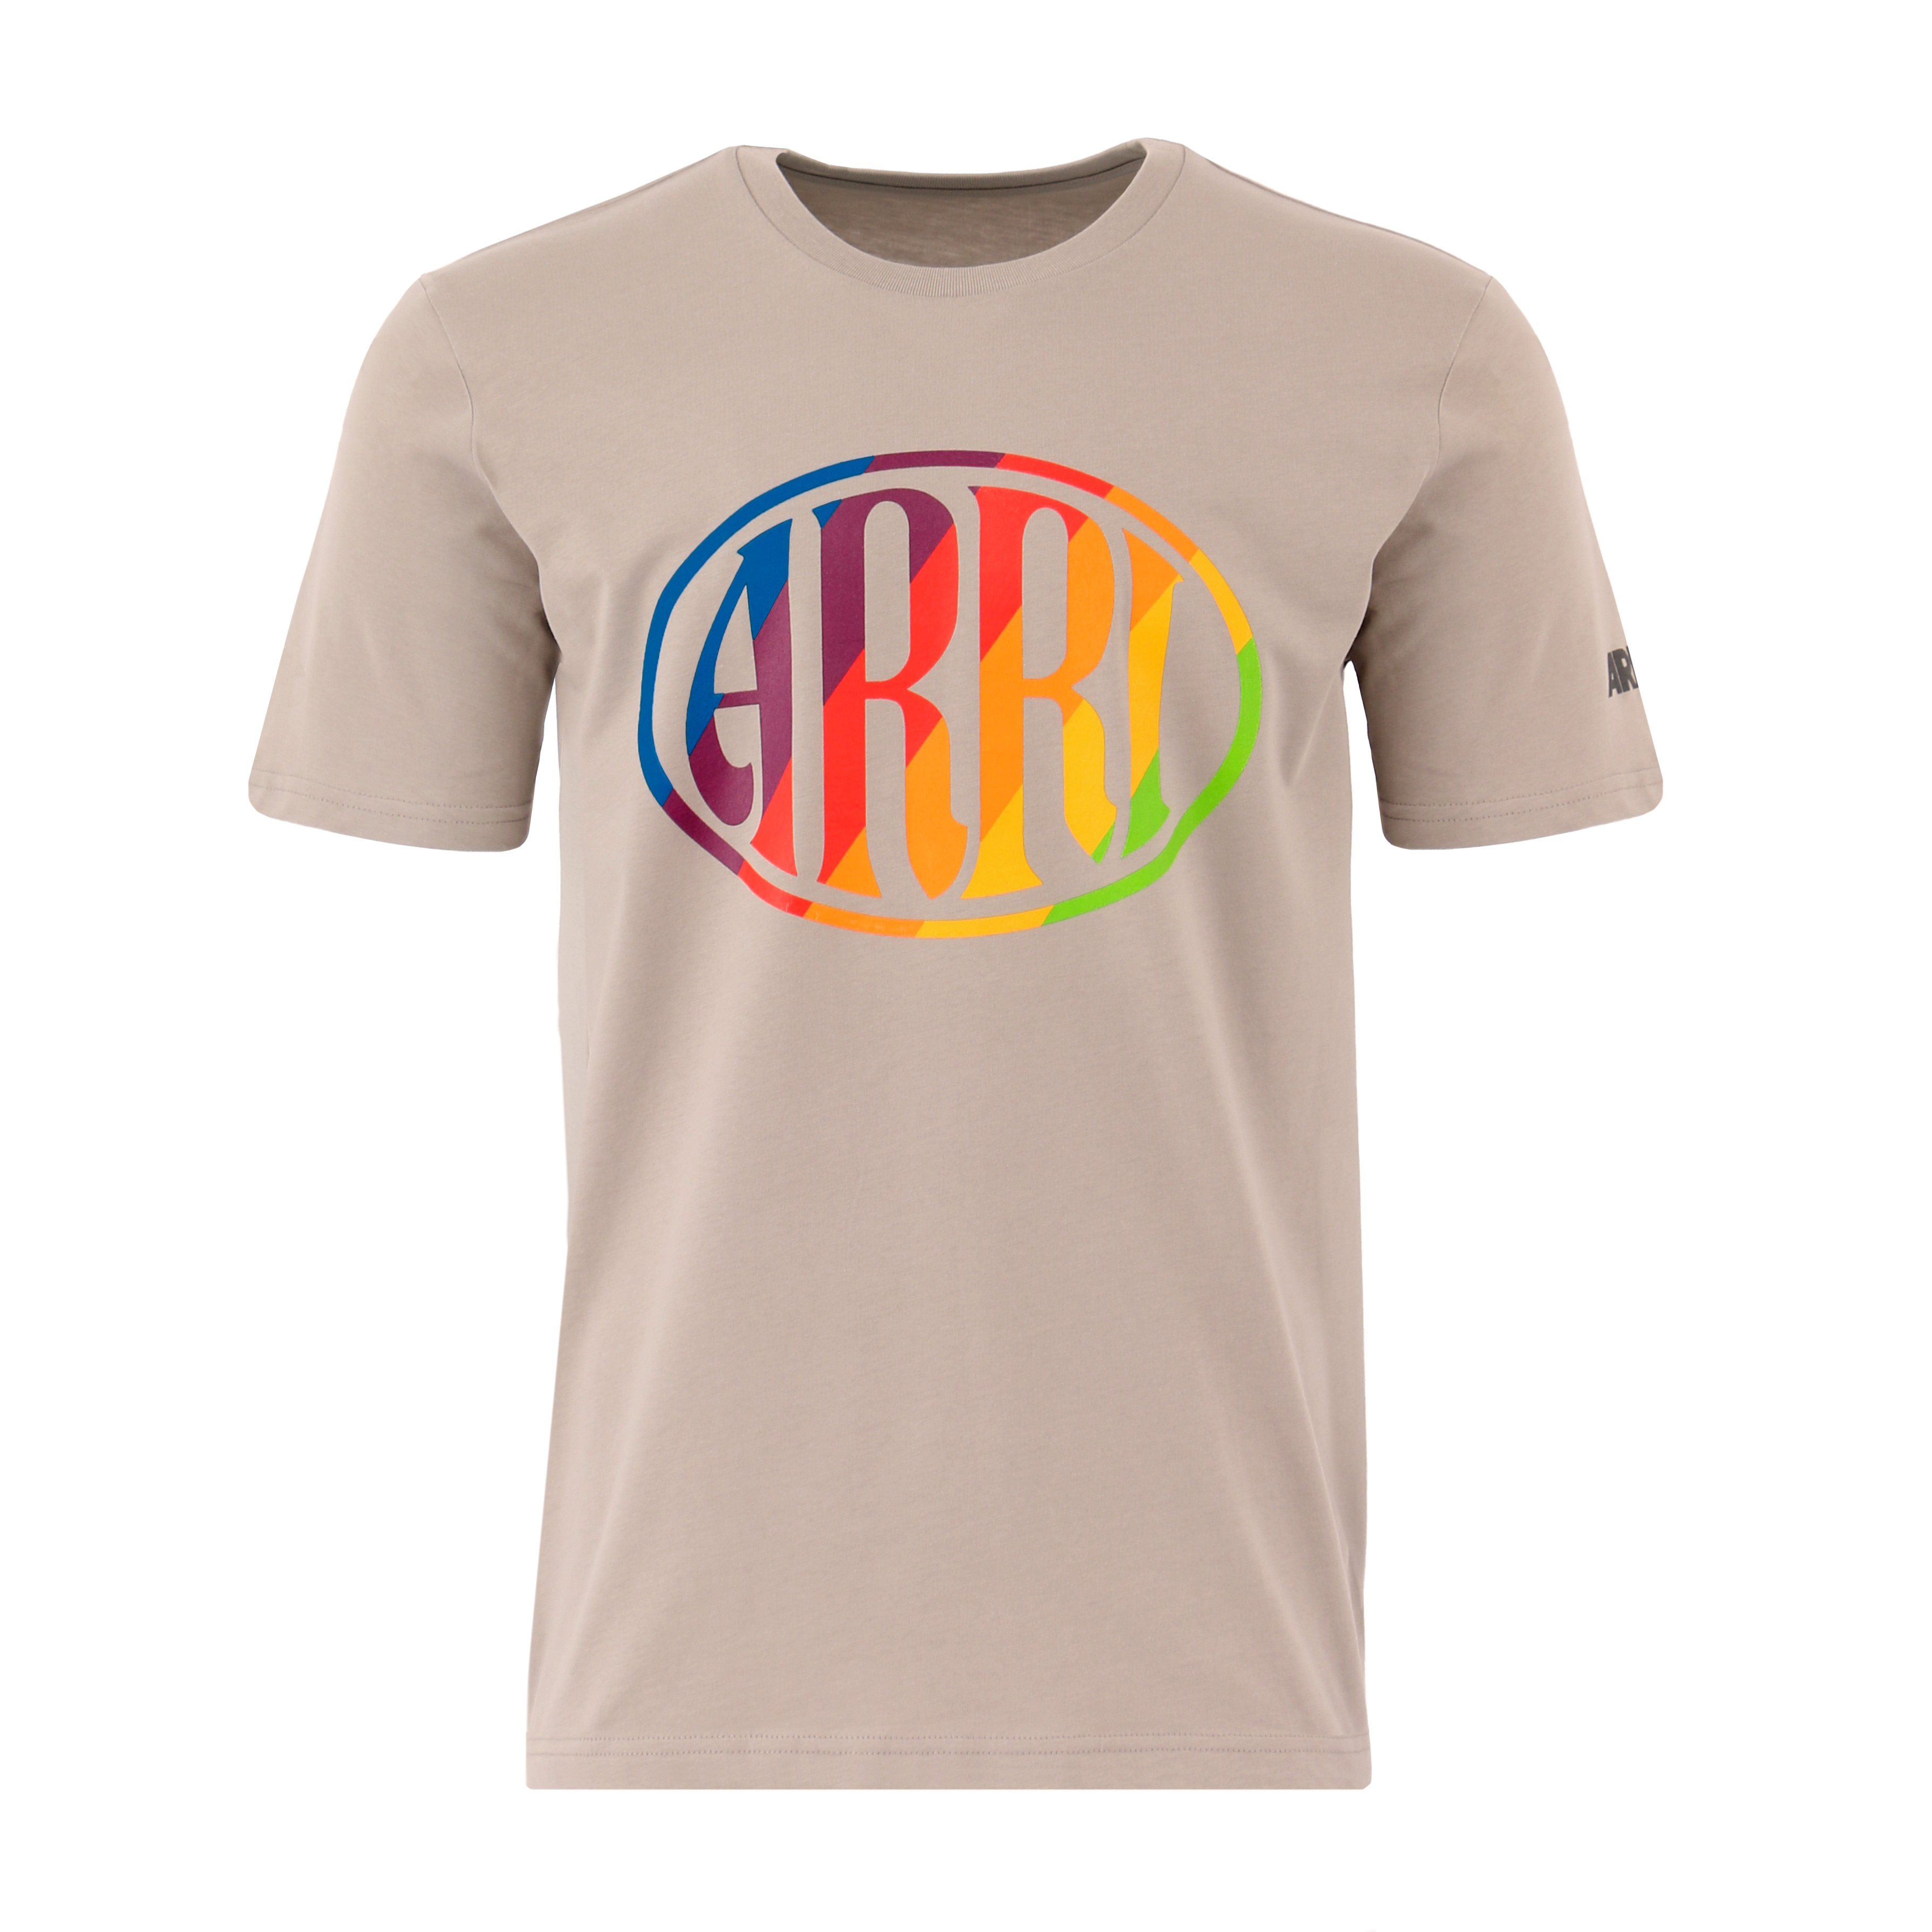 ARRI Unisex T-Shirt with rainbow logo